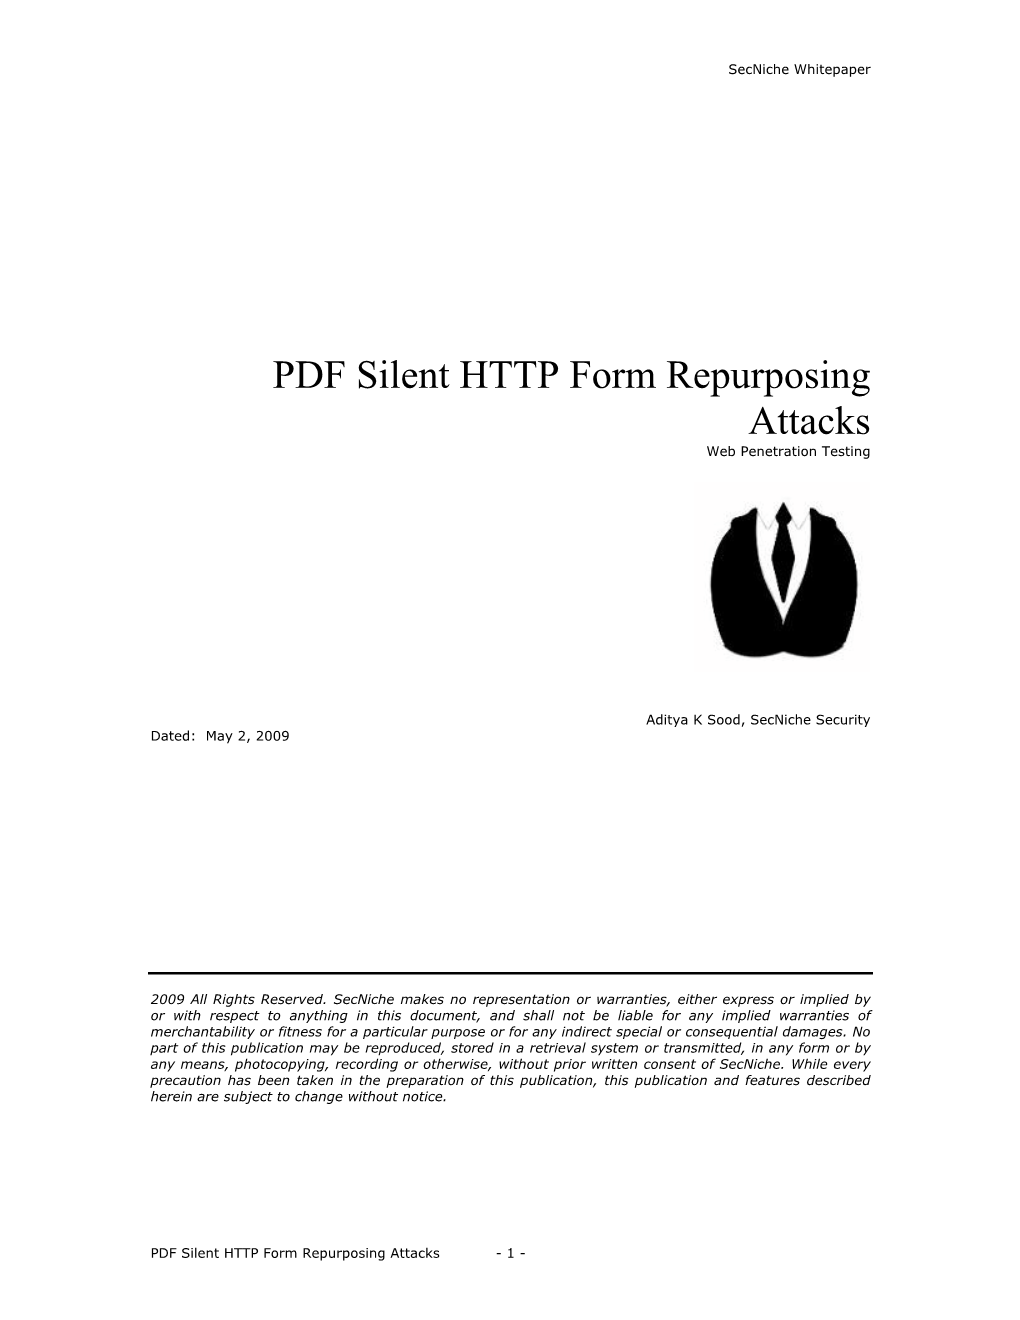 PDF Silent HTTP Form Repurposing Attacks Web Penetration Testing